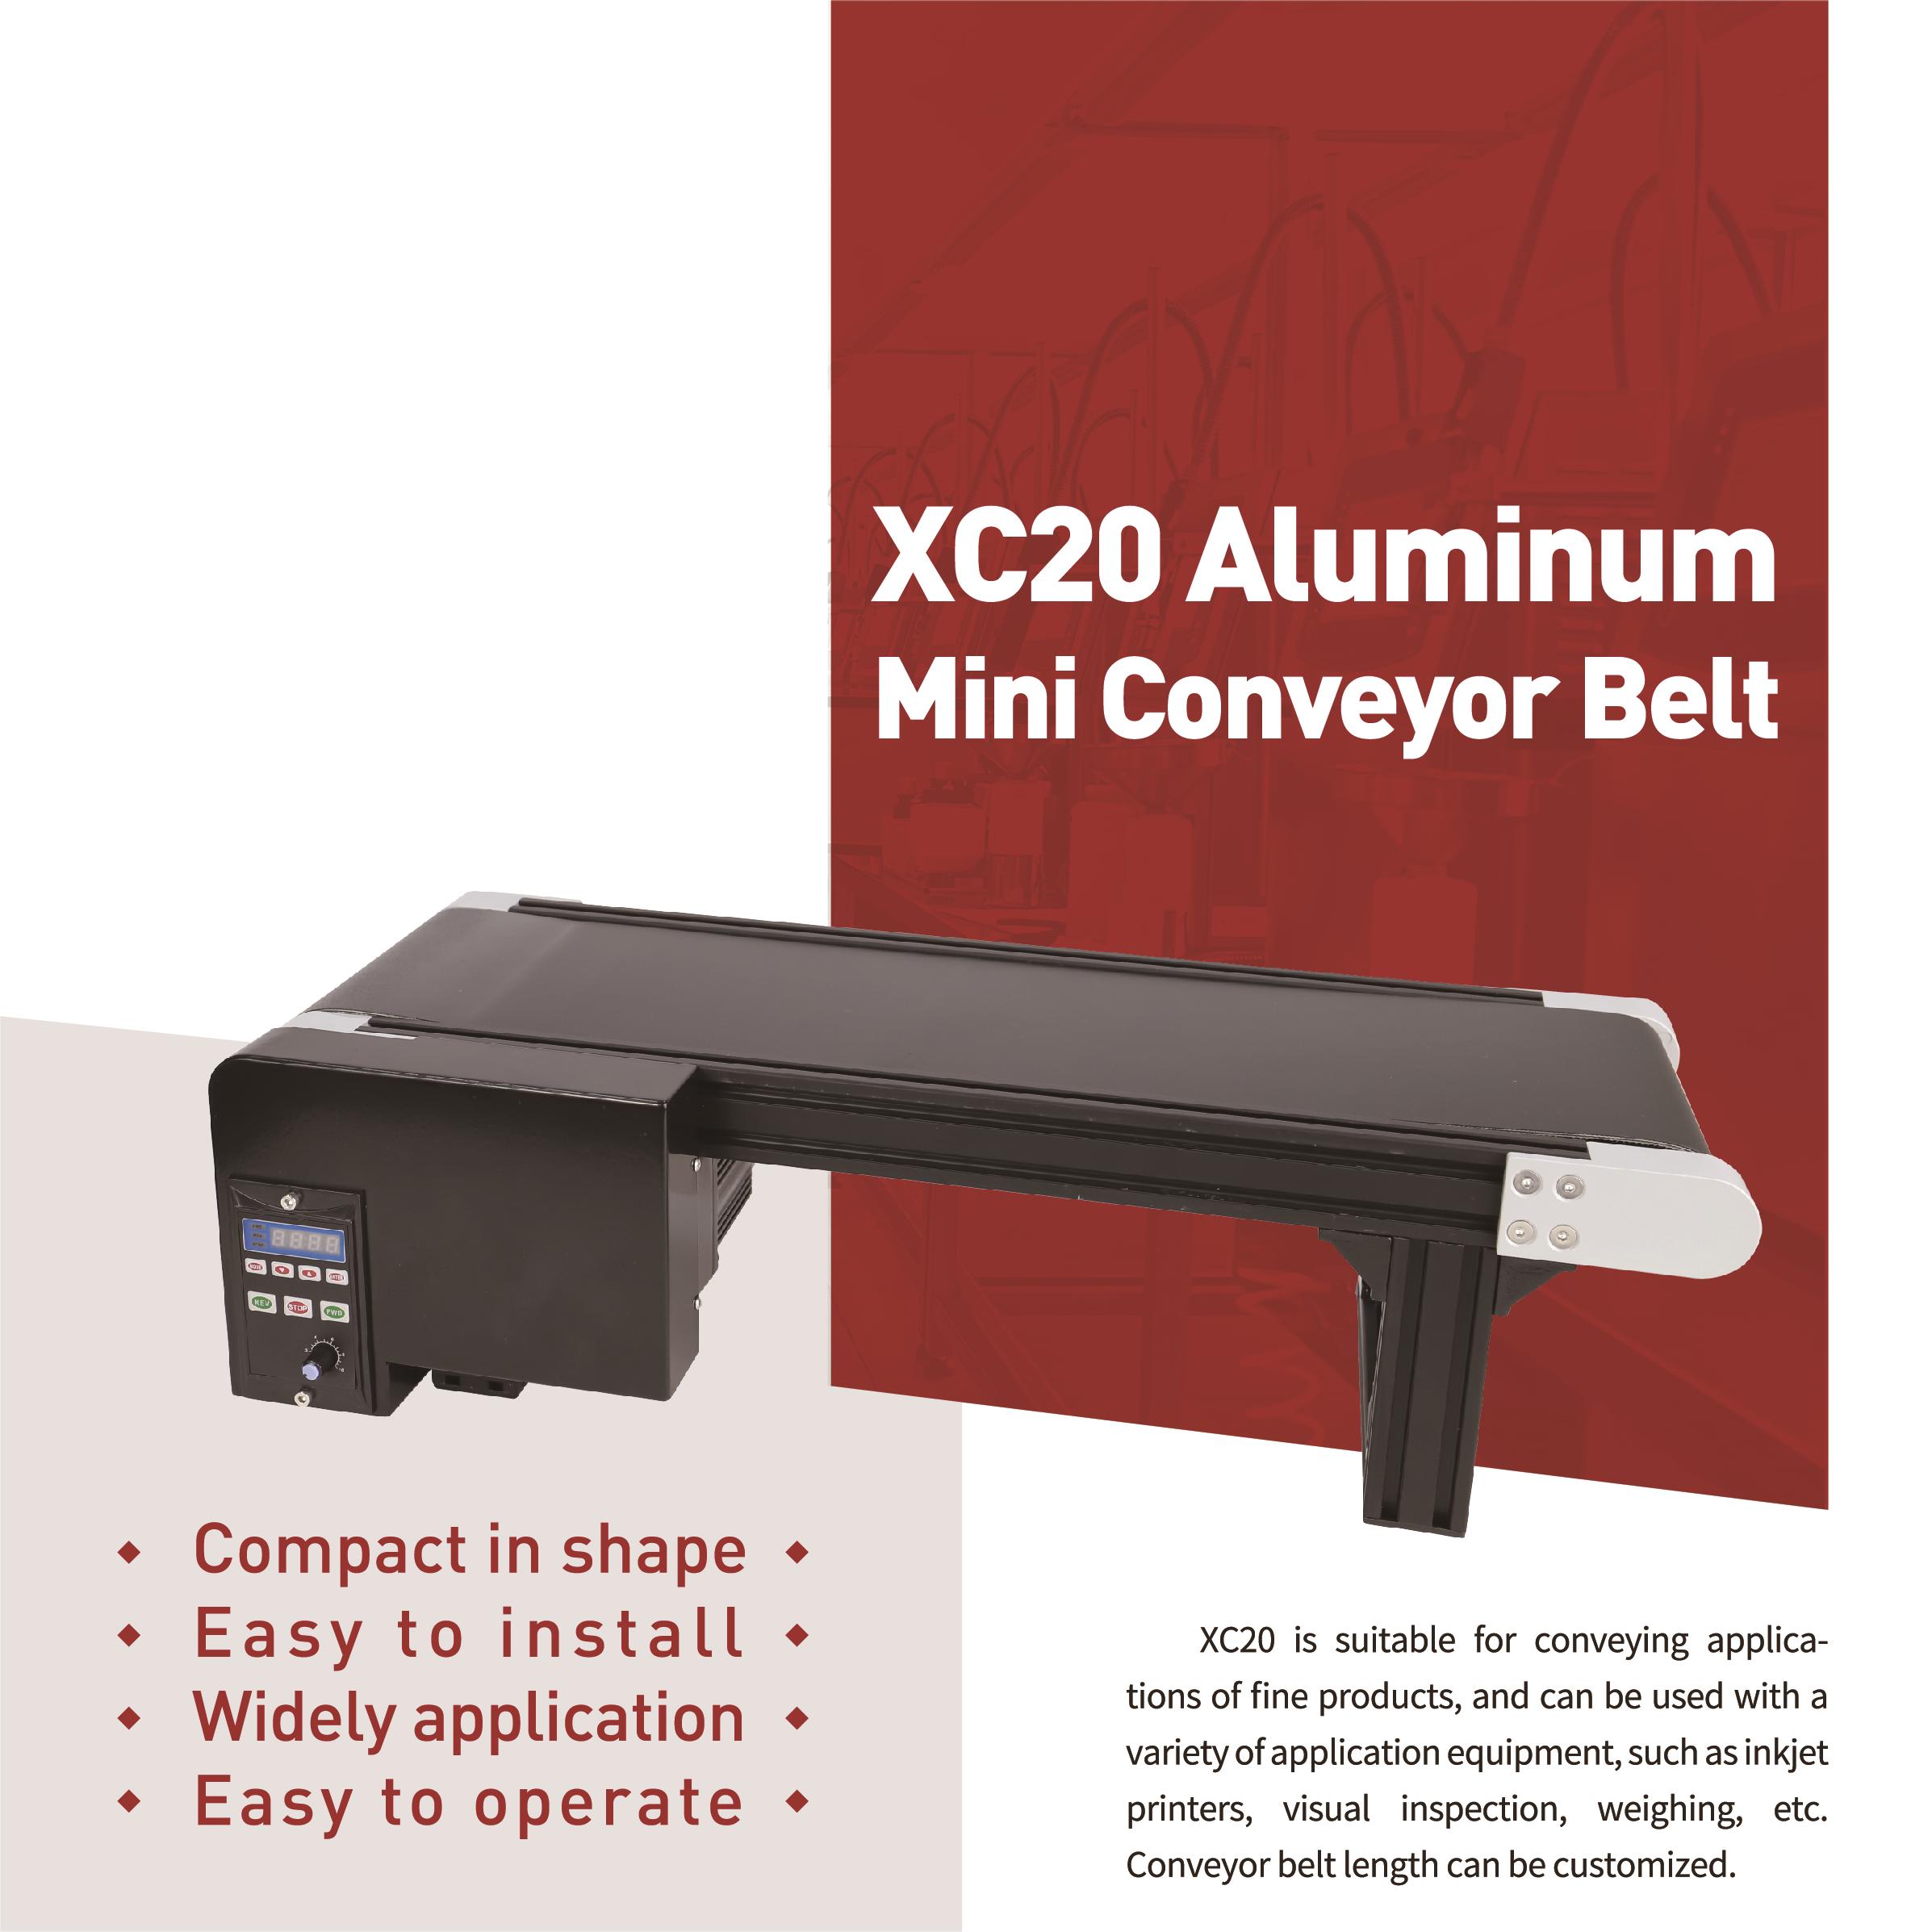 XC20 Aluminum Mini Conveyor Belt